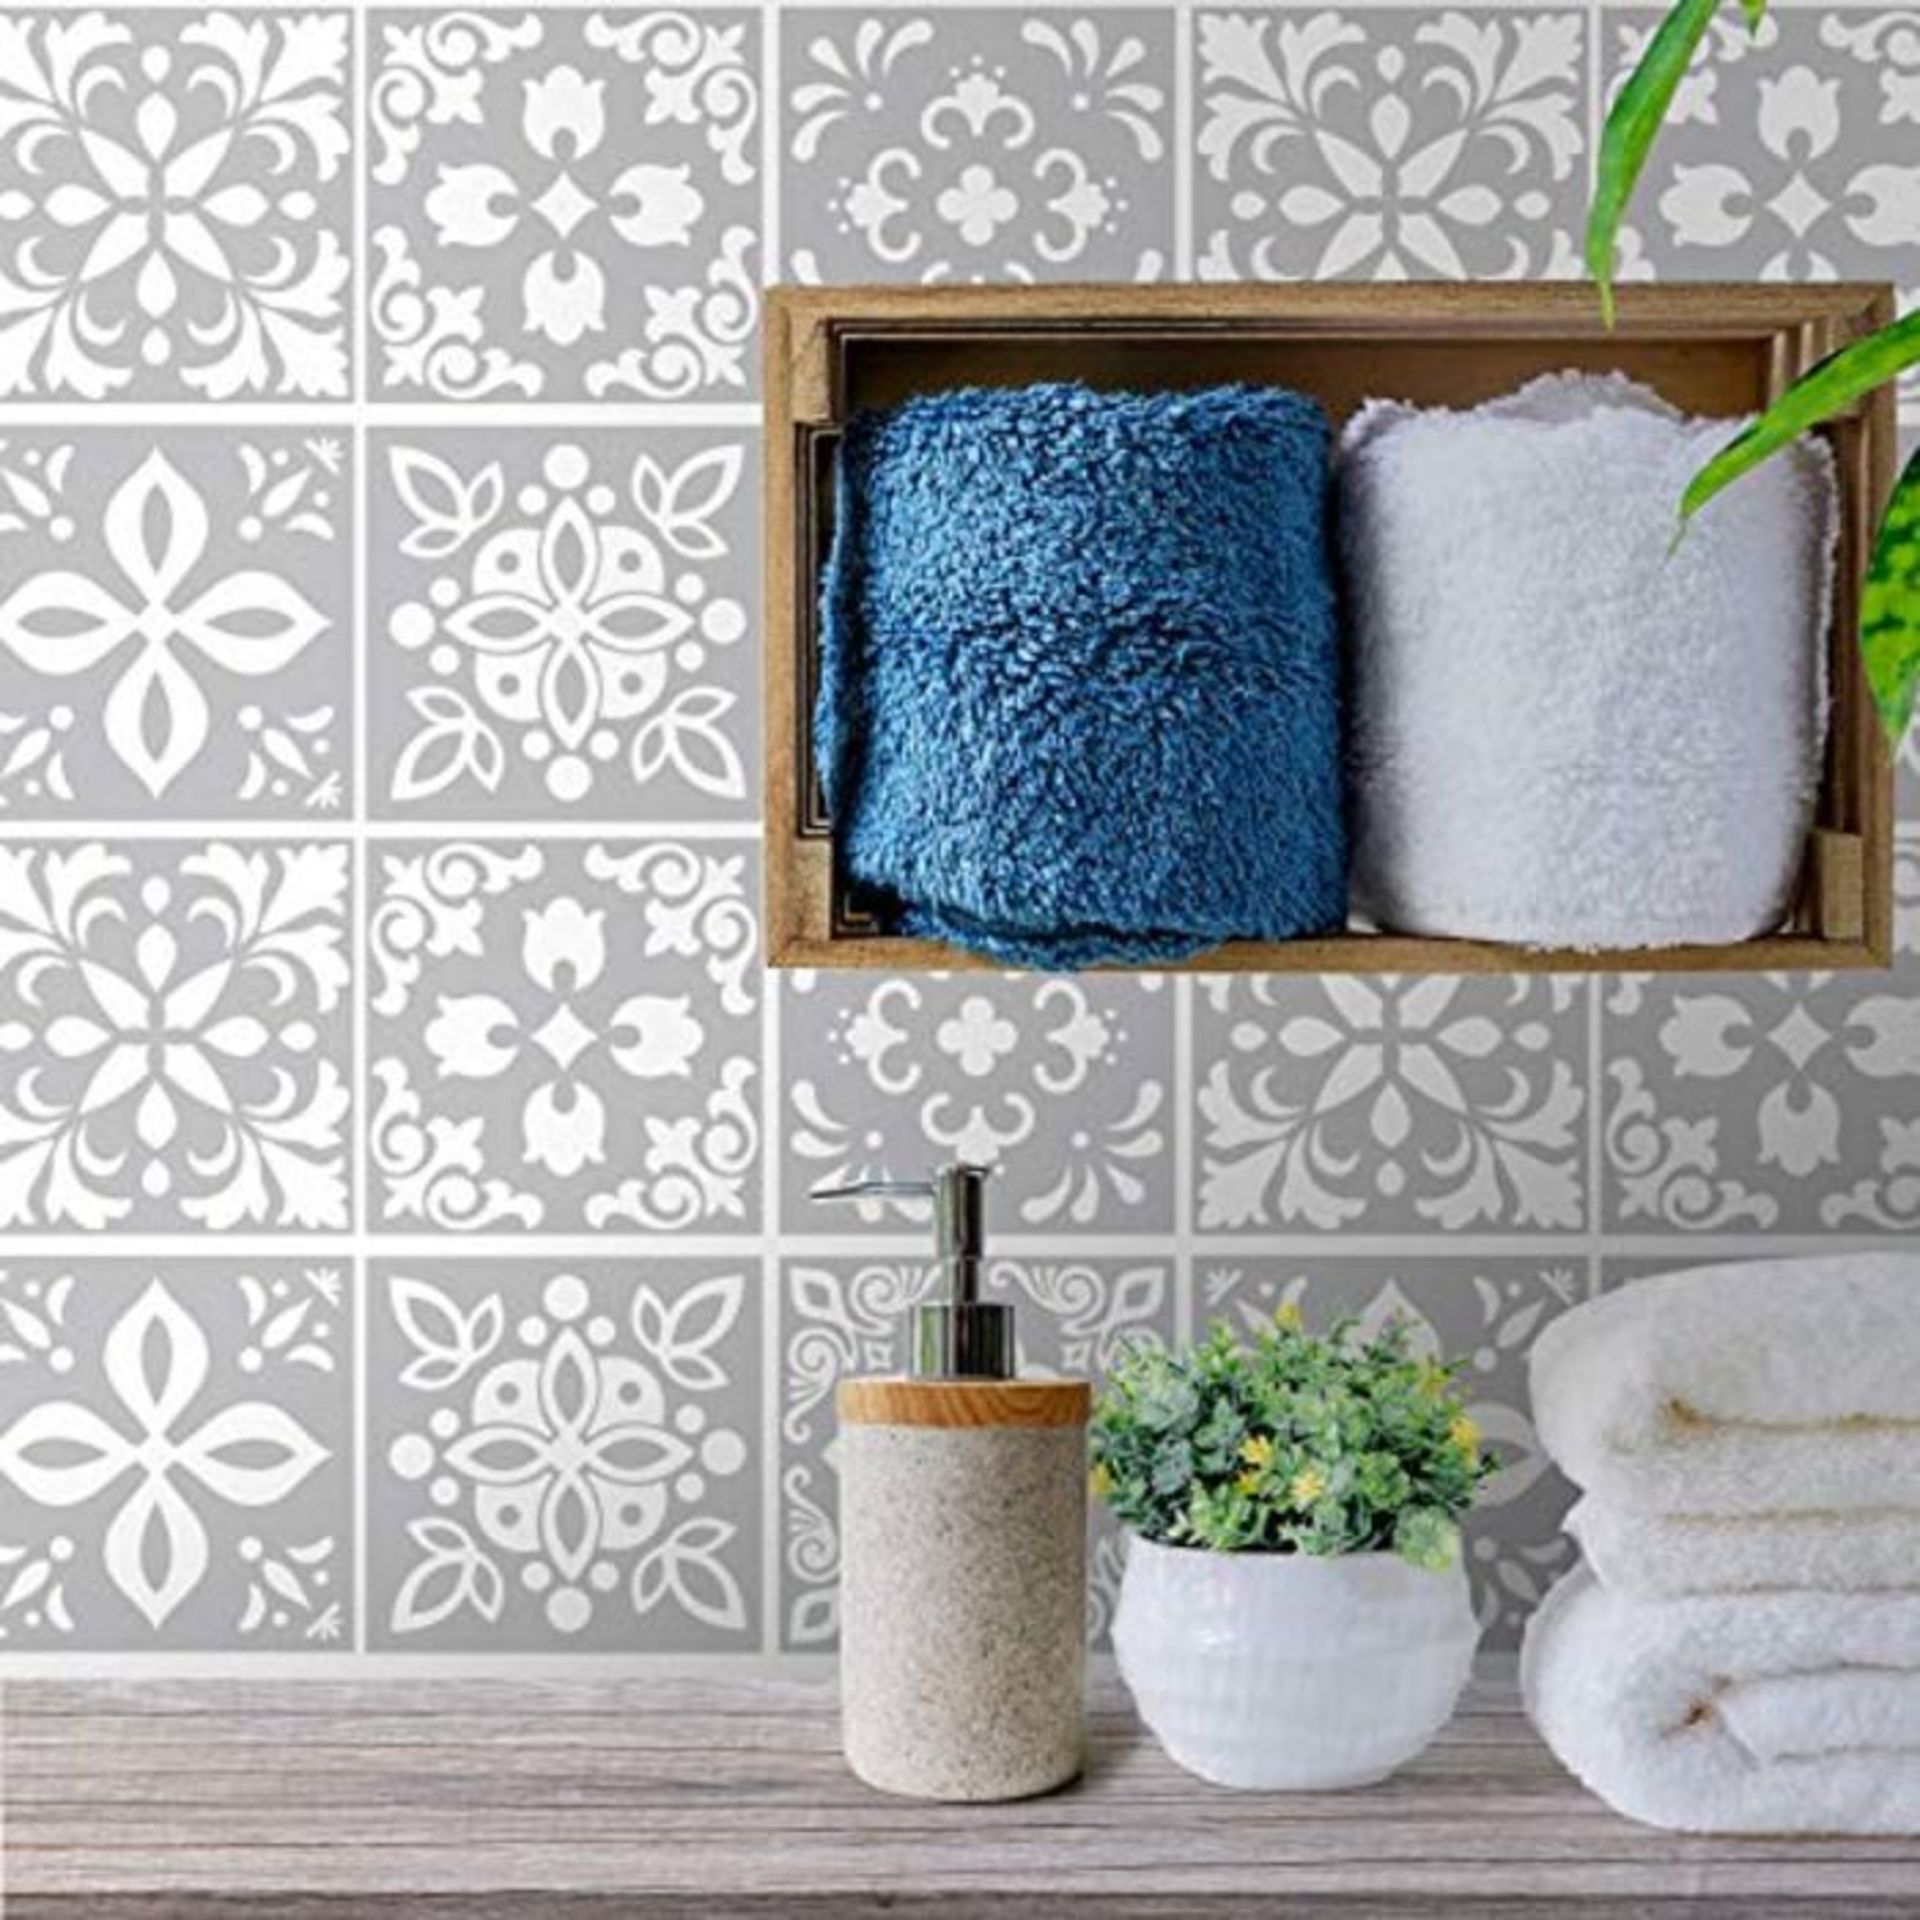 WALPLUS Wall Tile Sticker 15cm(6") 24 pcs Light Grey Cement DIY Art Home Decorations S